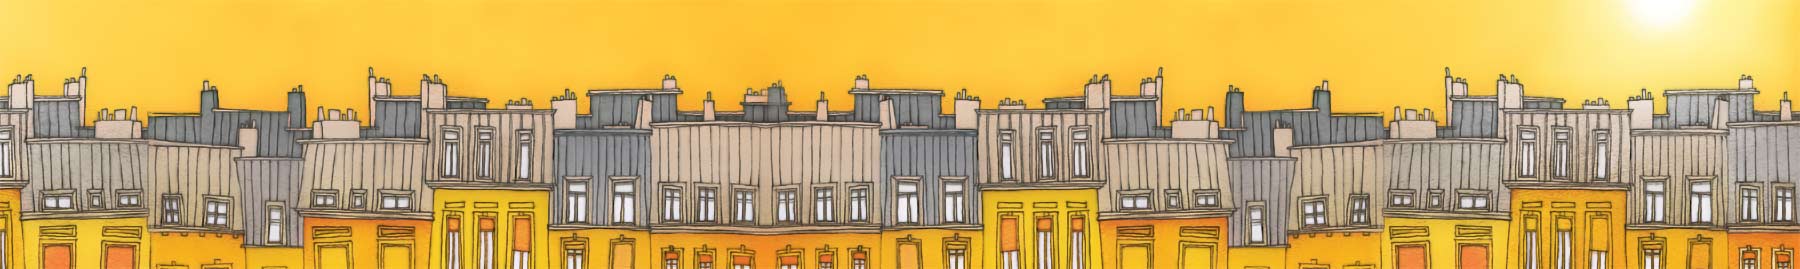 painting of yellow city skyline under bright sun